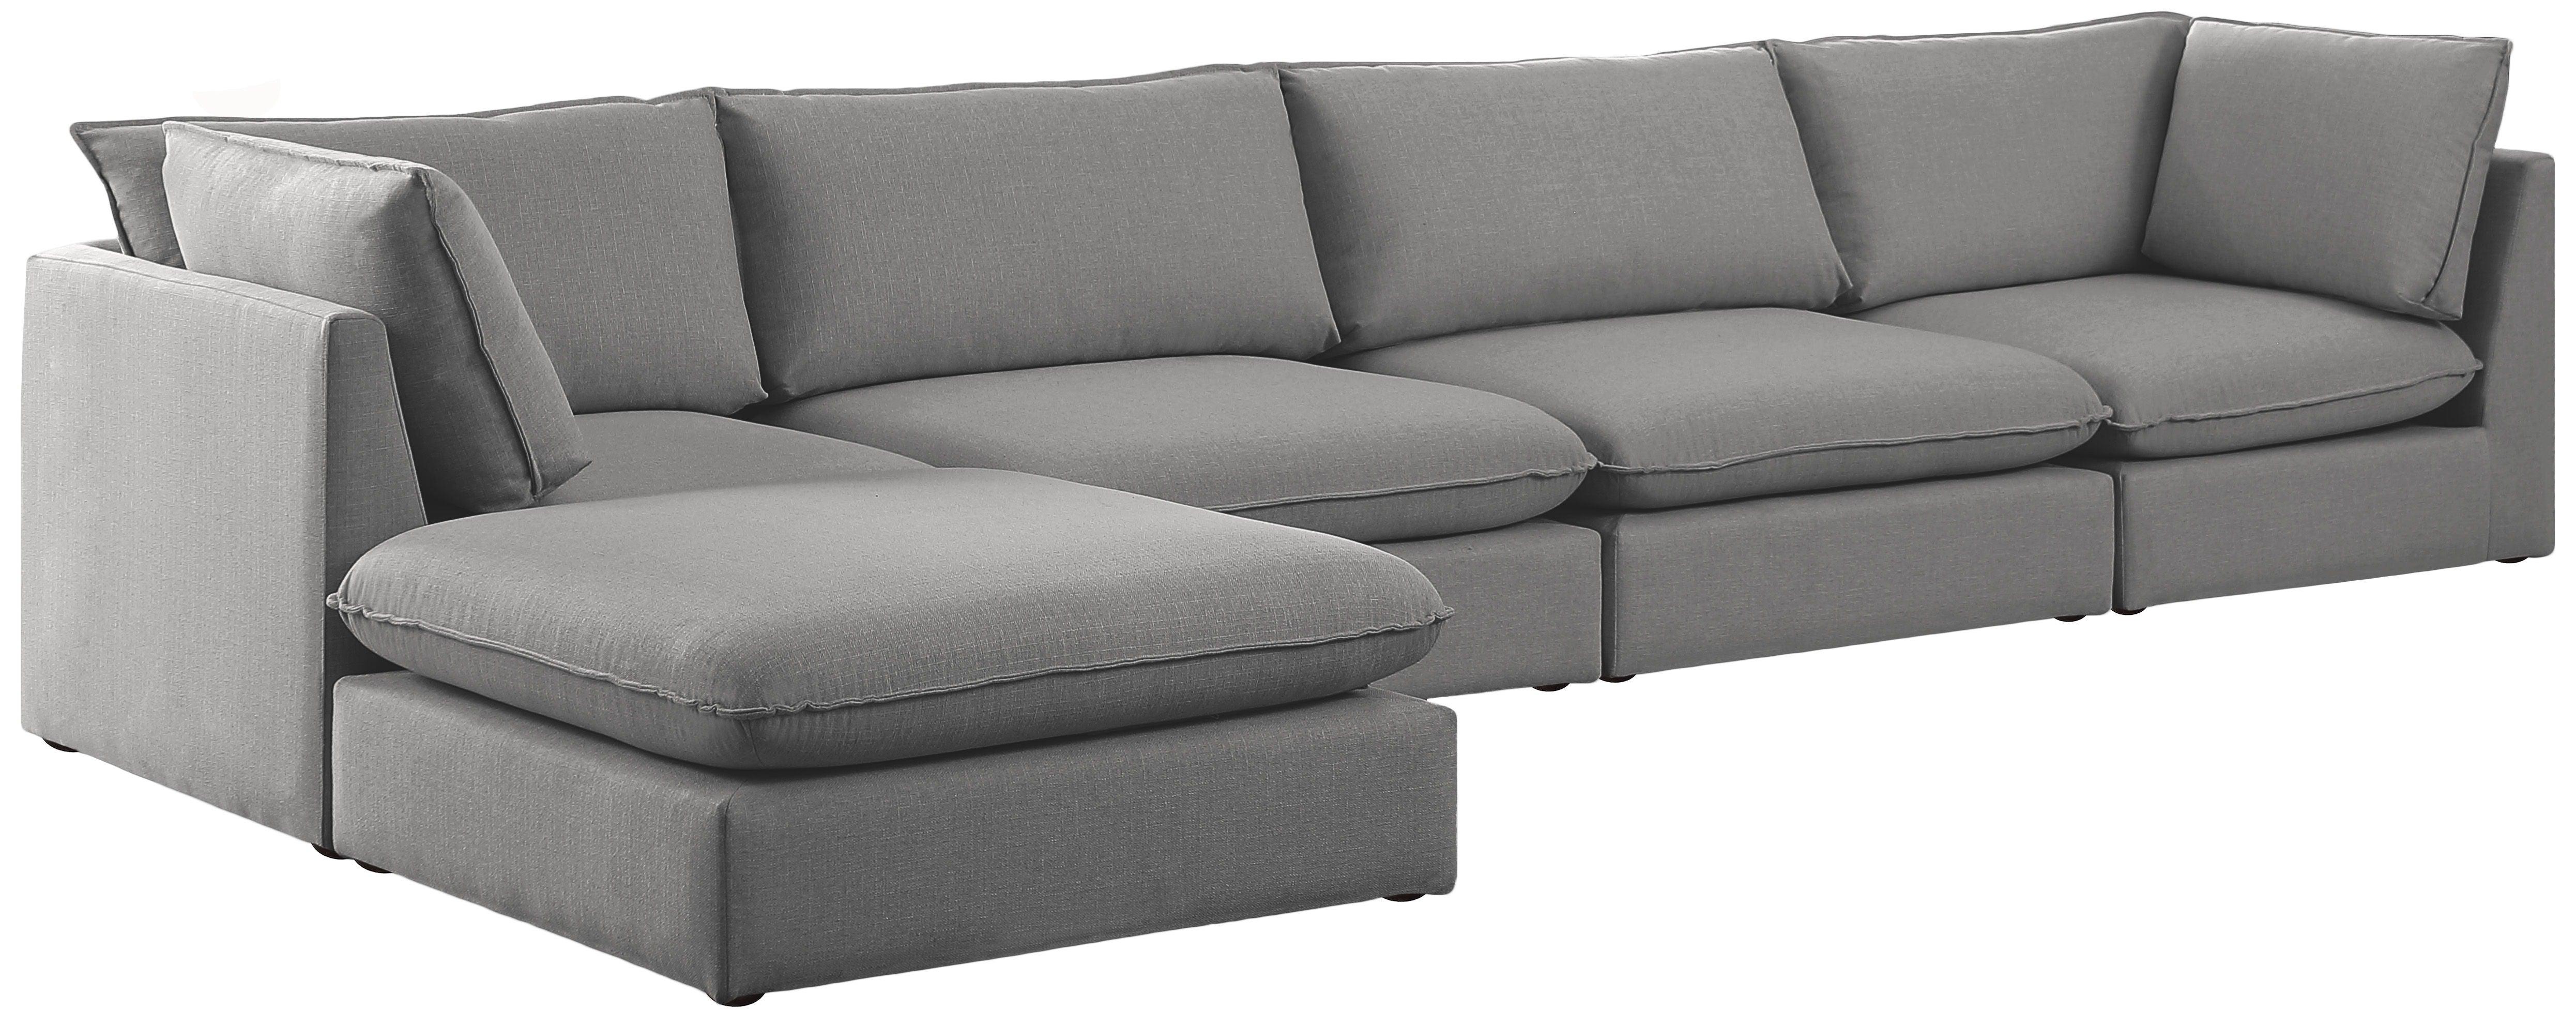 Meridian Furniture - Mackenzie - Modular Sectional 5 Piece - Gray - Fabric - 5th Avenue Furniture